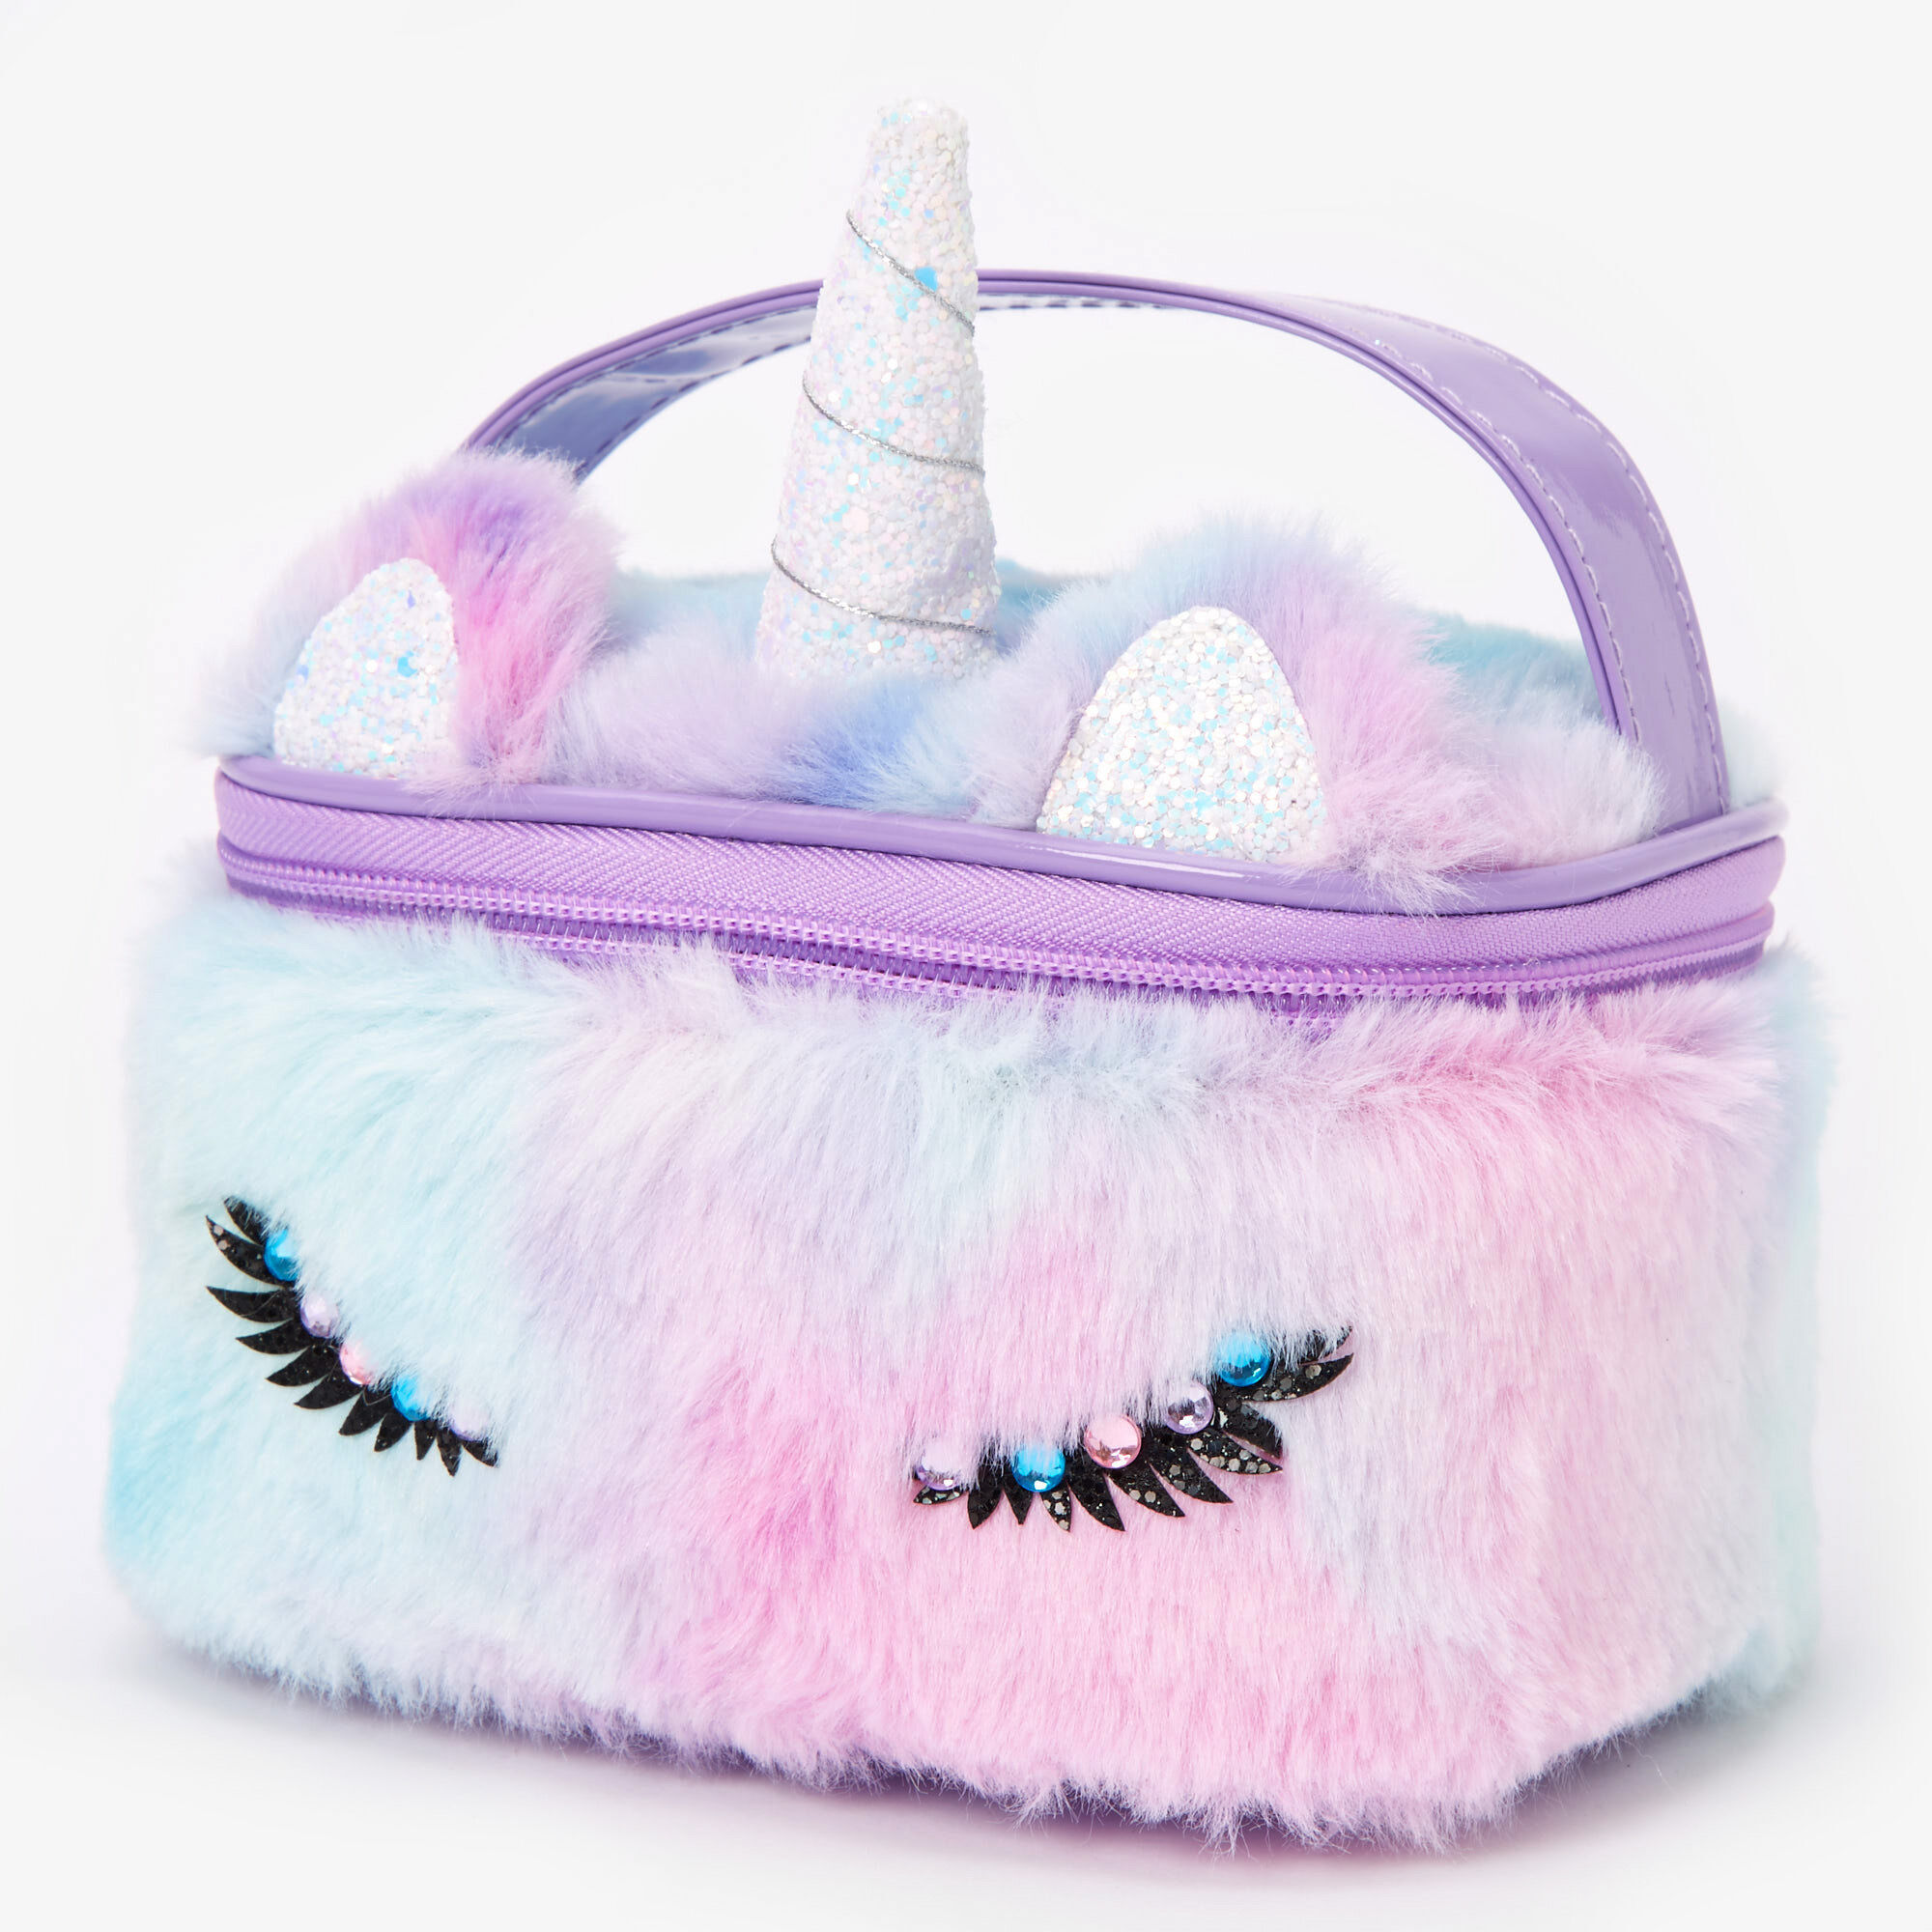 Purple Ombre Unicorn Furry Makeup Bag